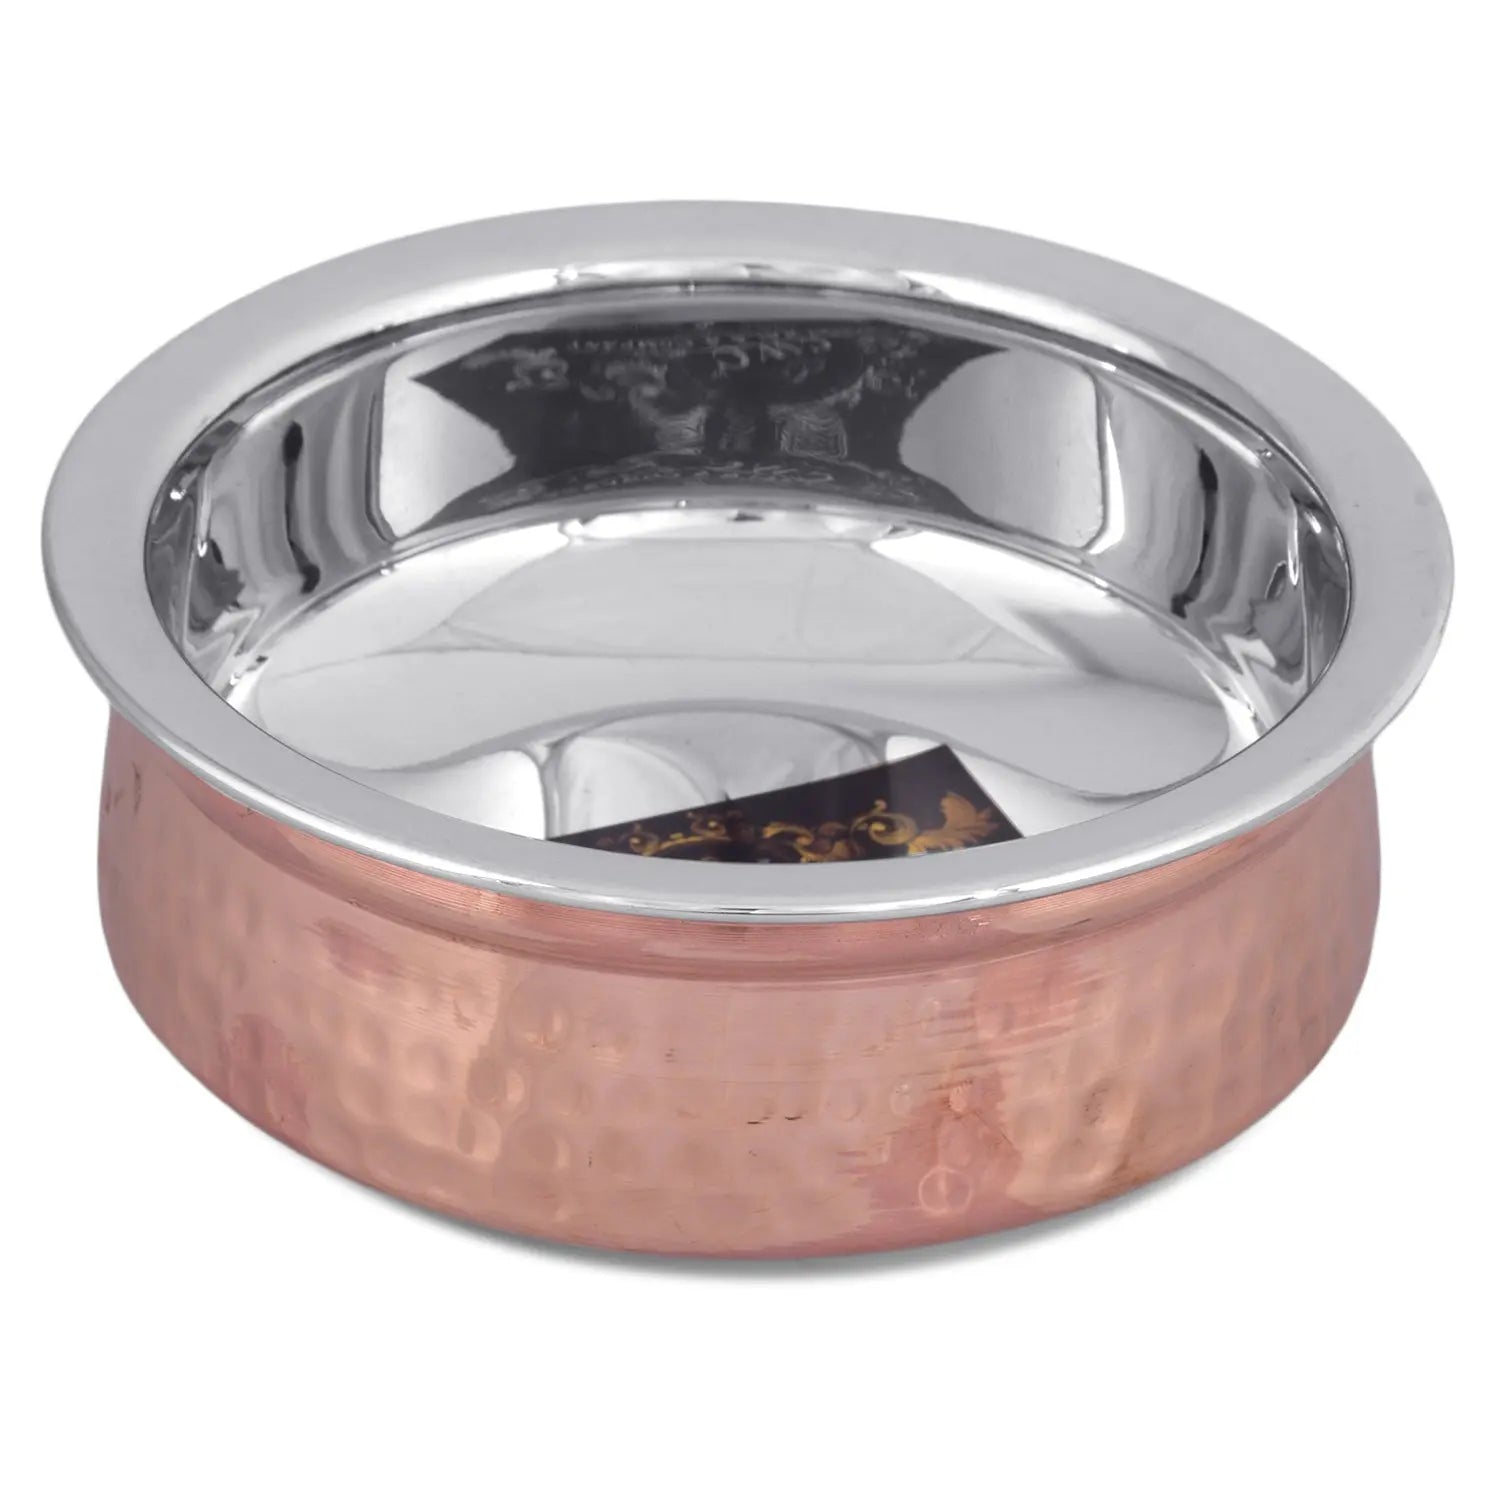 Pure Copper Handi For Serving Food - CROCKERY WALA AND COMPANY 